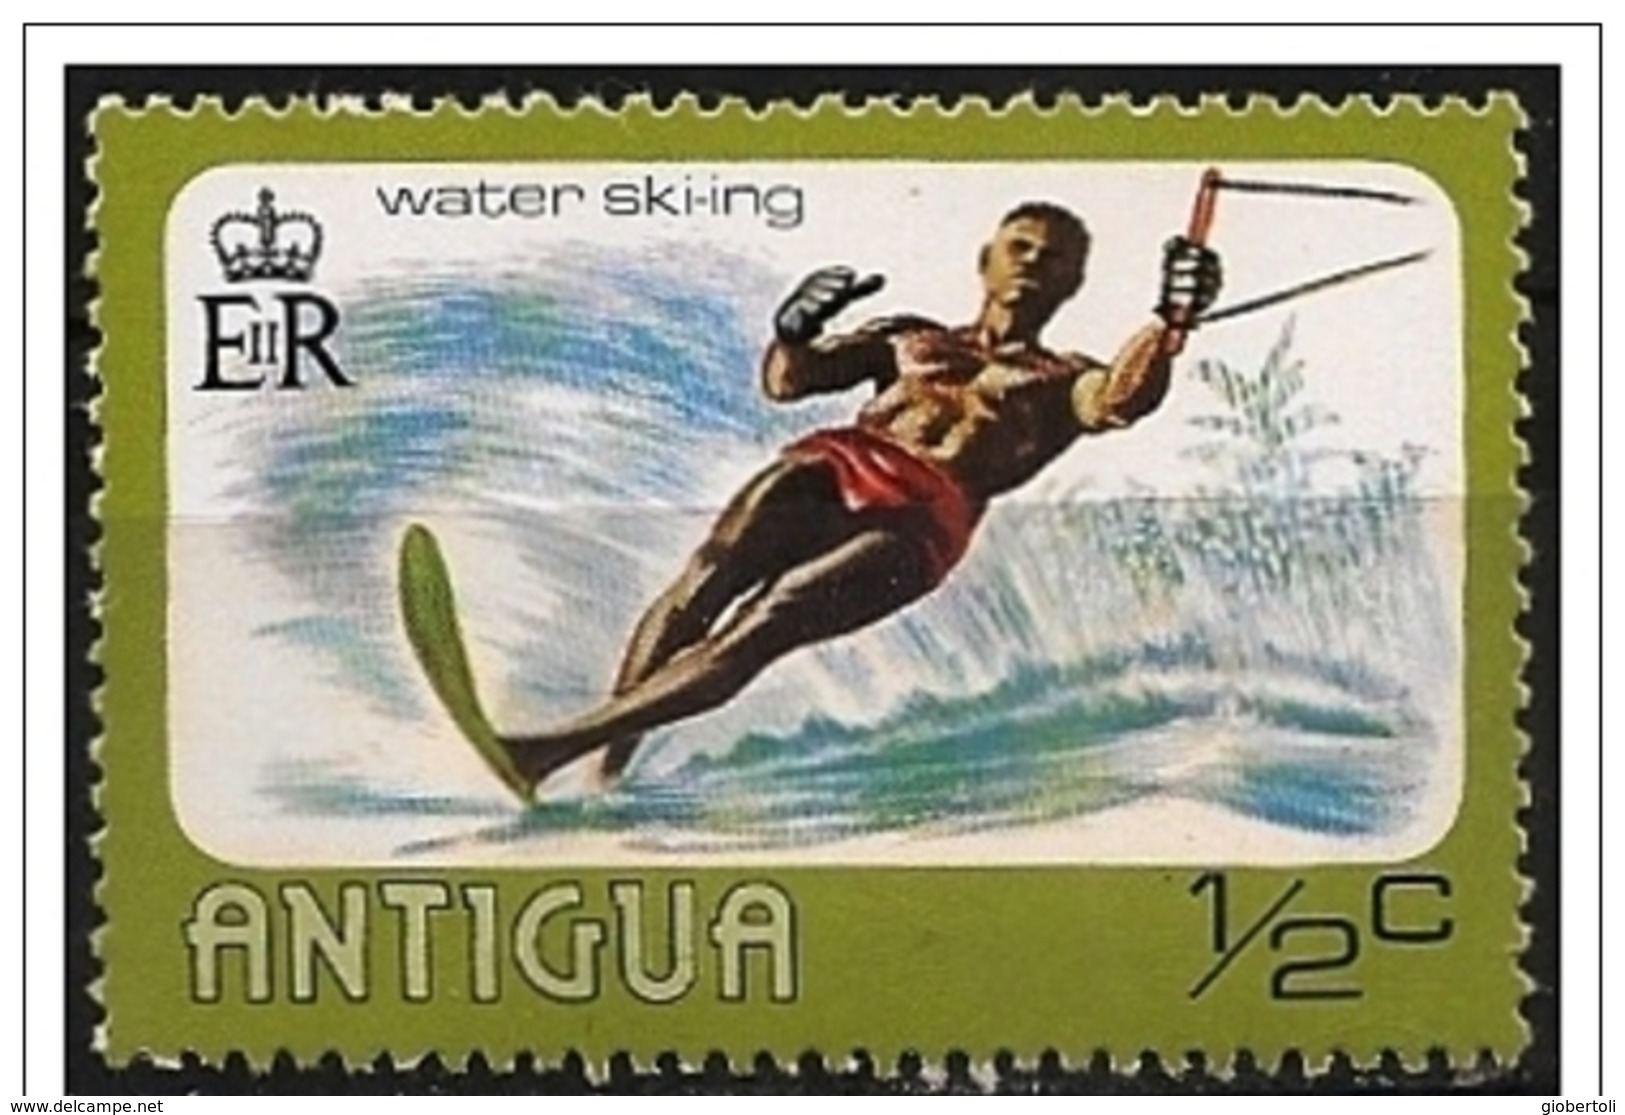 Antigua: Sci Nautico, Water Skiing, Ski Nautique - Sci Nautico